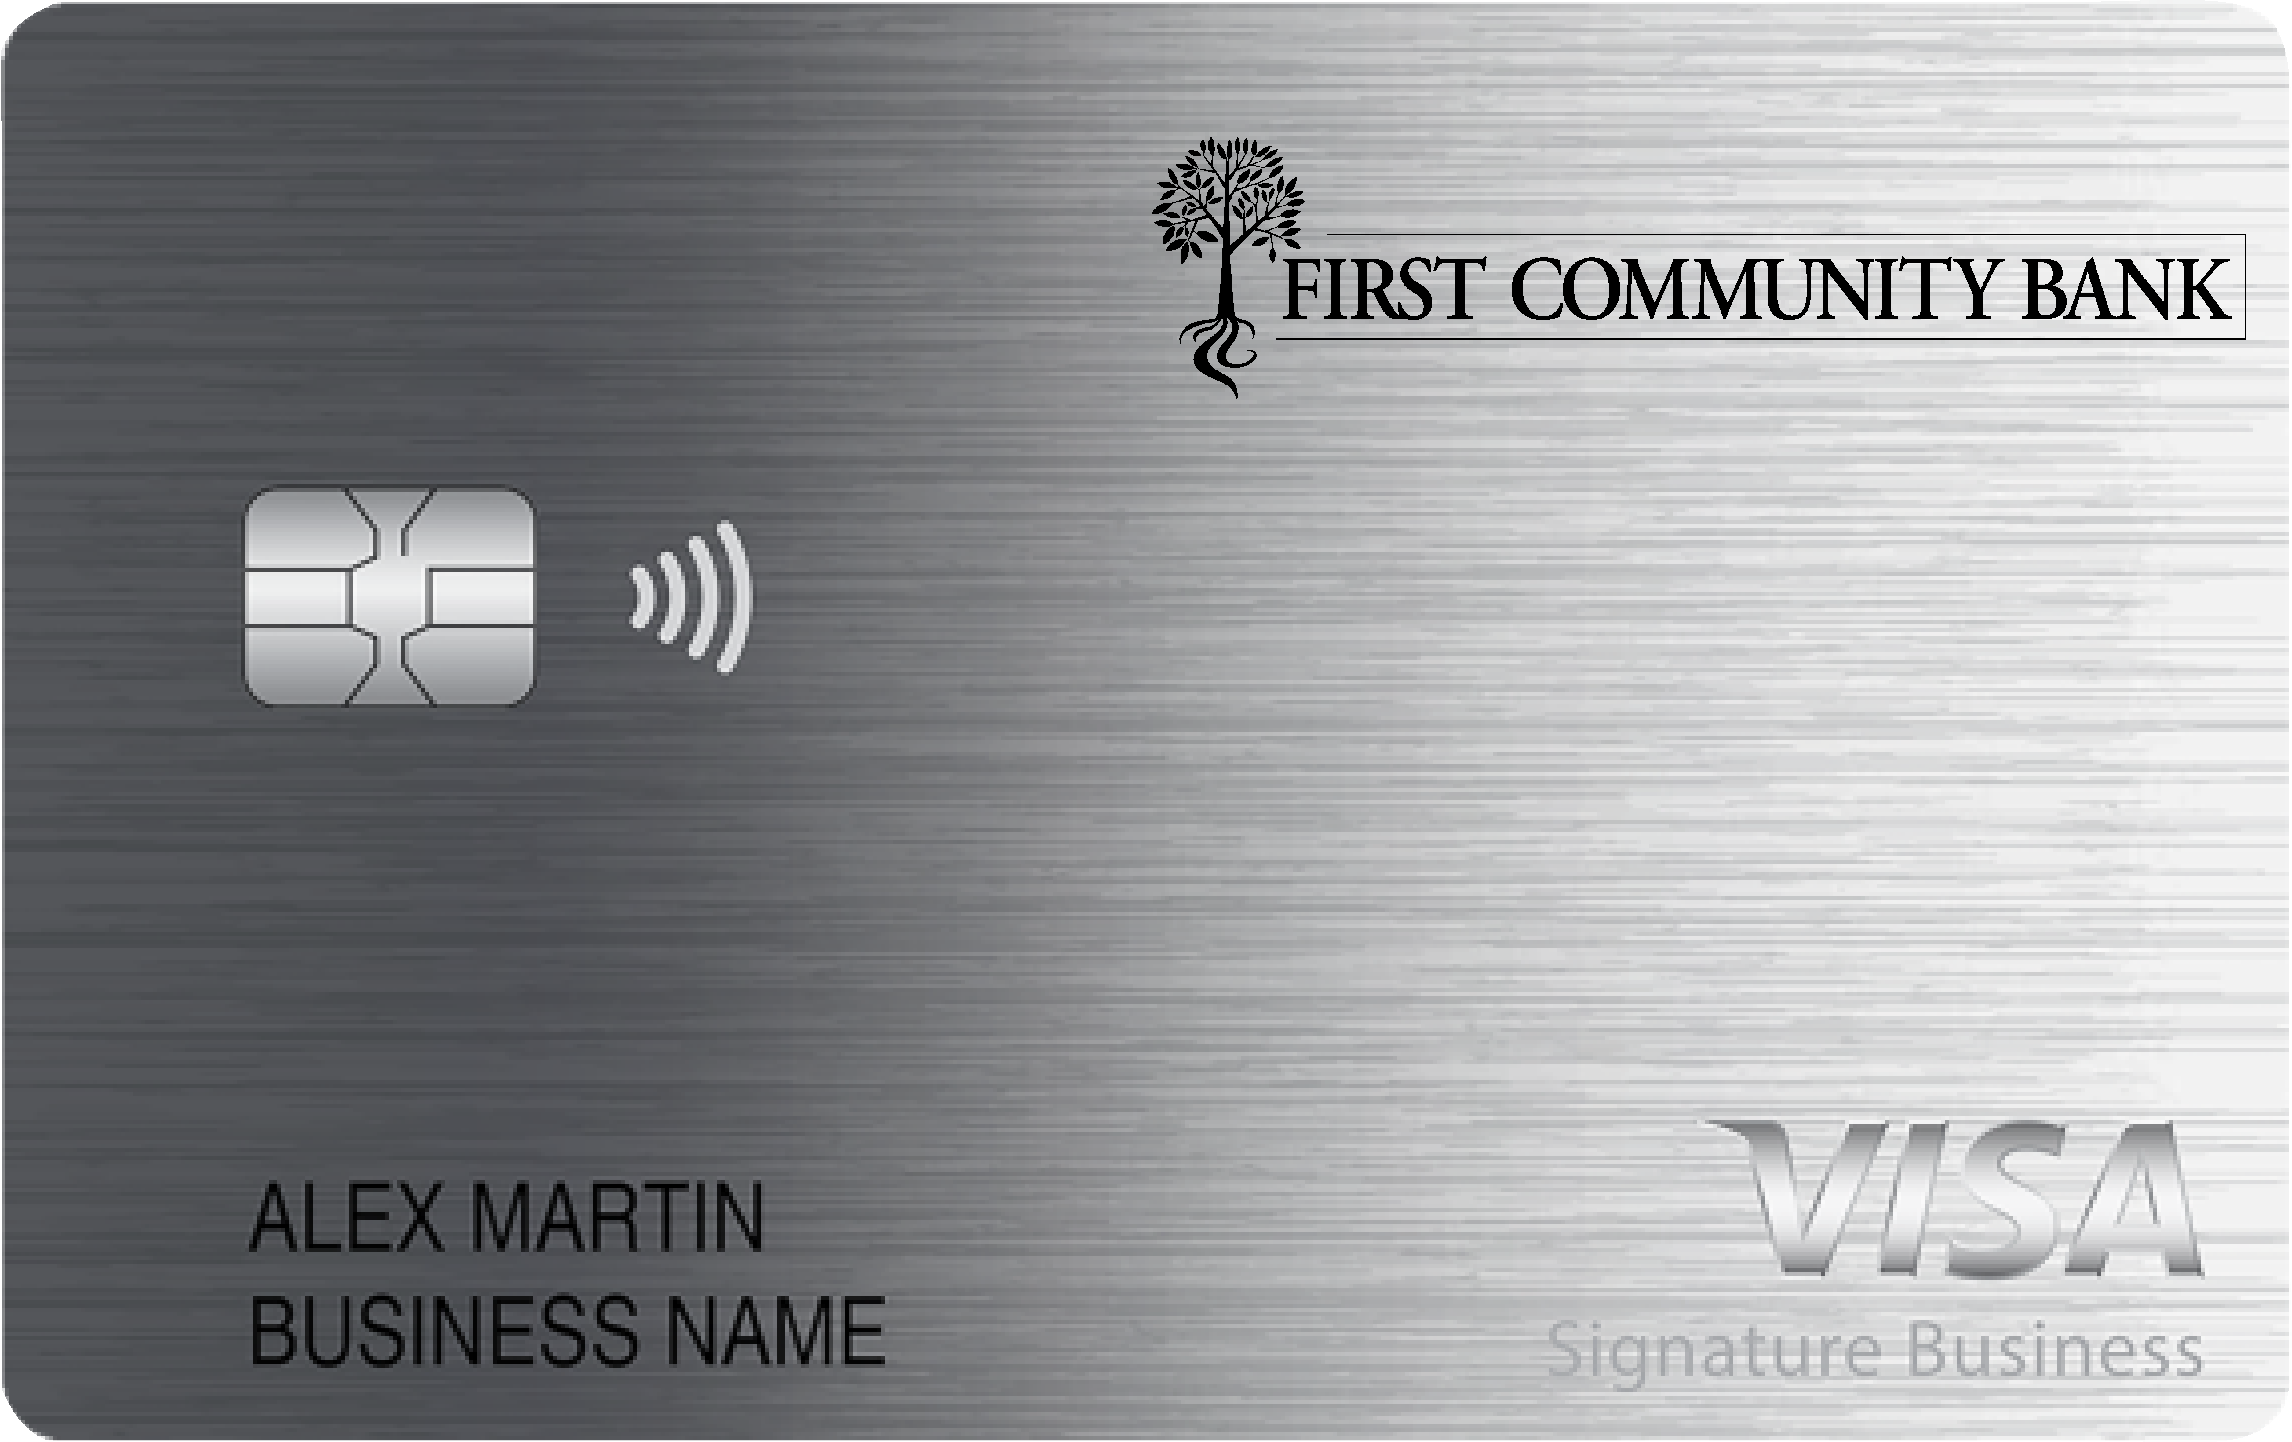 First Community Bank Smart Business Rewards Card